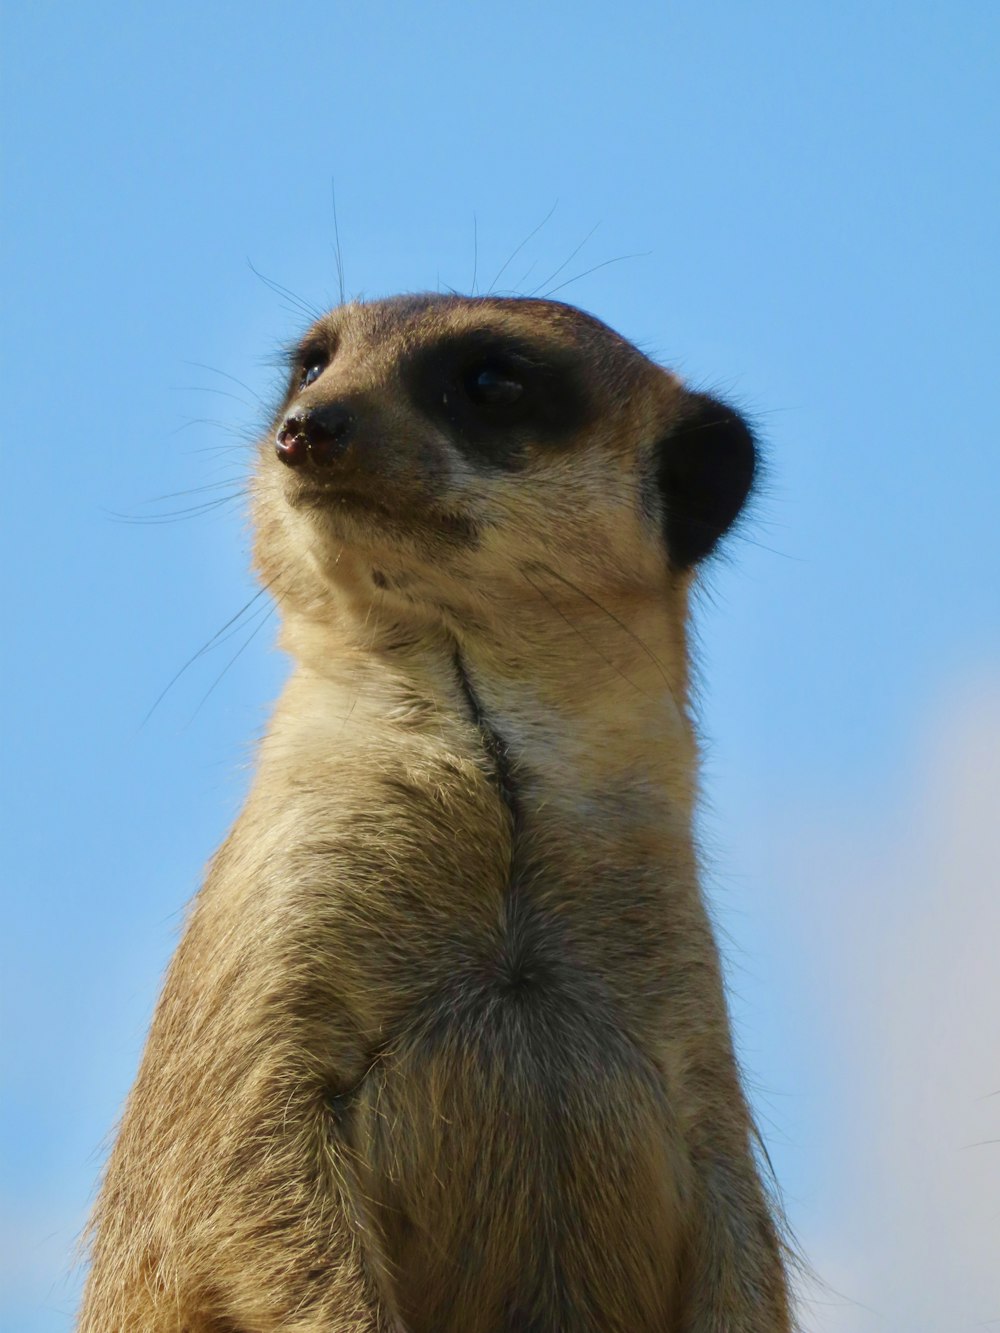 brown and black meerkat under blue sky during daytime